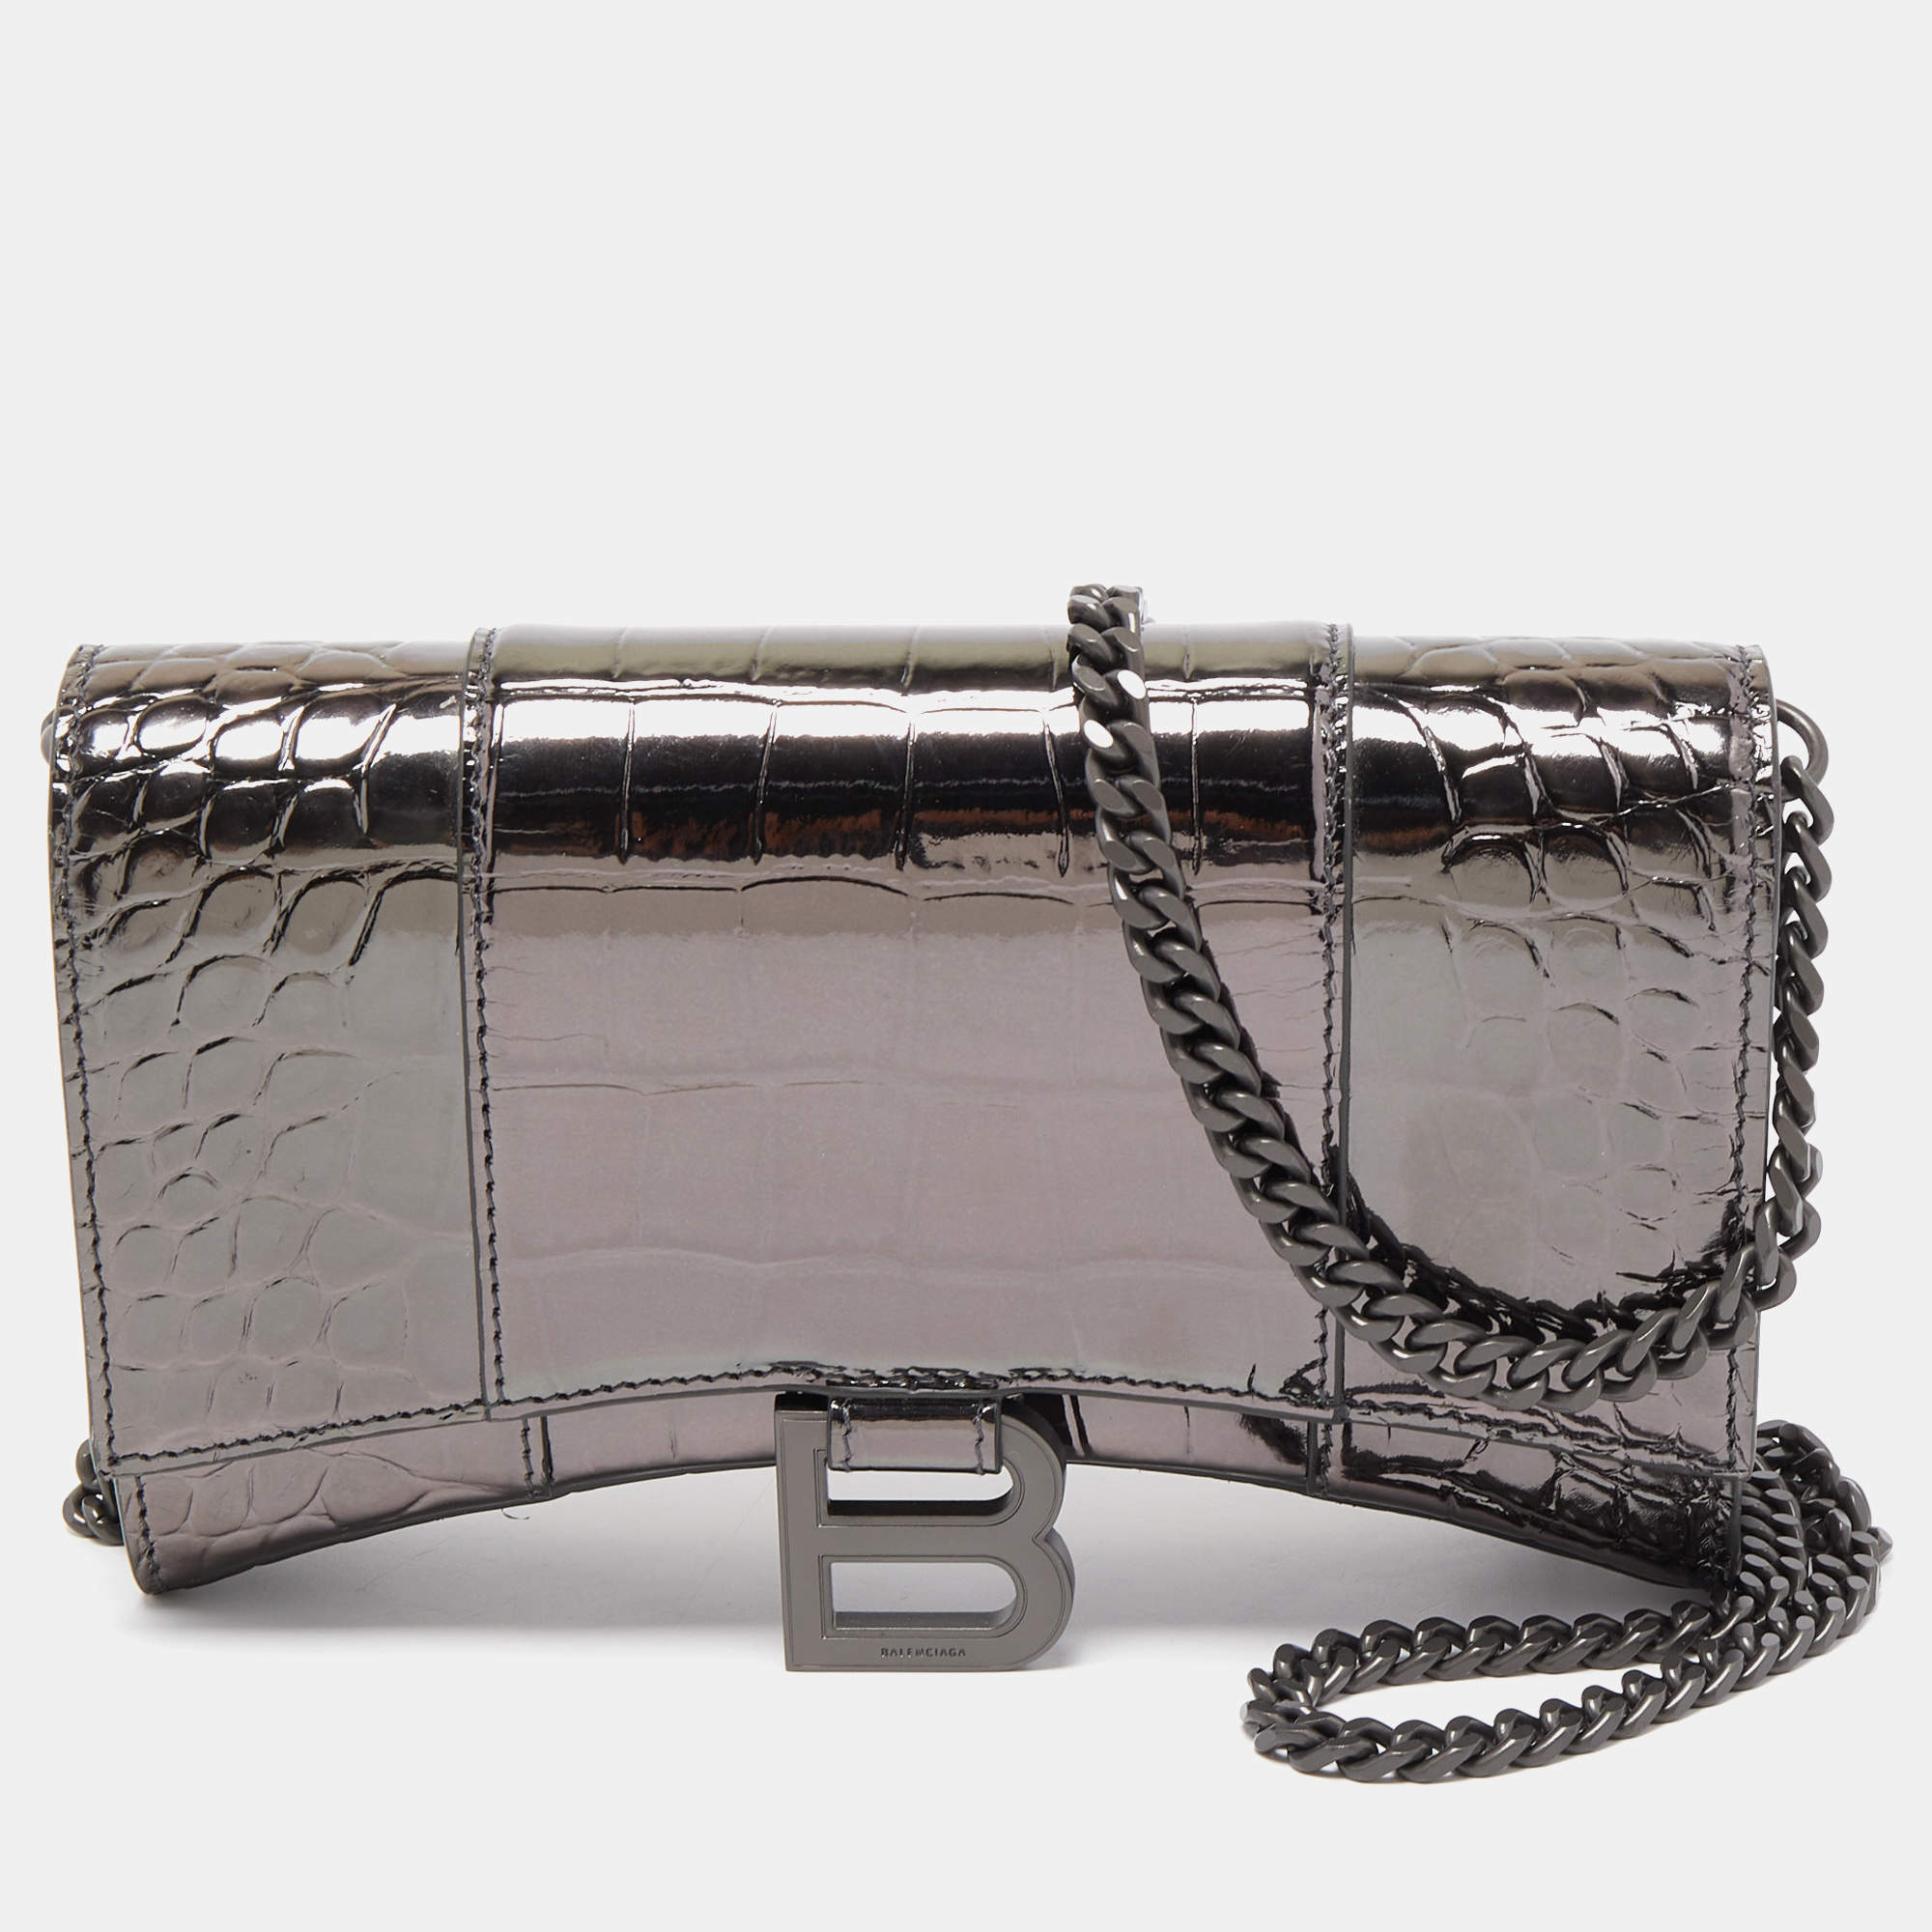 Luxury wallet - Balenciaga Hourglass wallet in silver crocodile